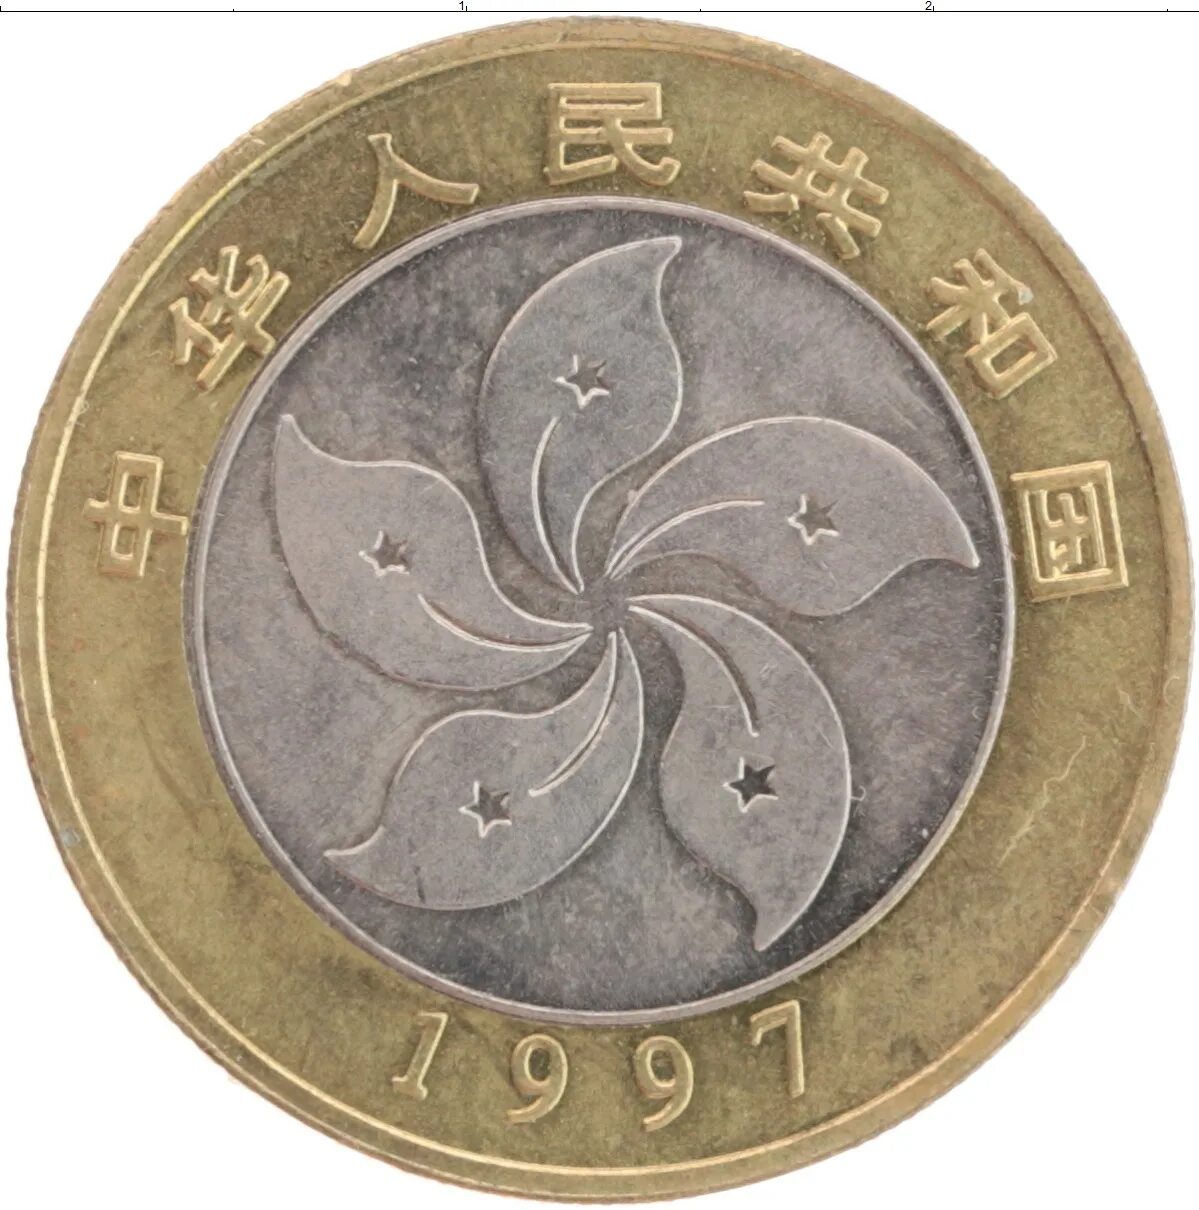 Китайский юань монеты. Монеты Китая 10 юаней. Китайская монета 2 юань. Китайская монета 10цяней. Китайский 2013 год змеи монета 10 юань.